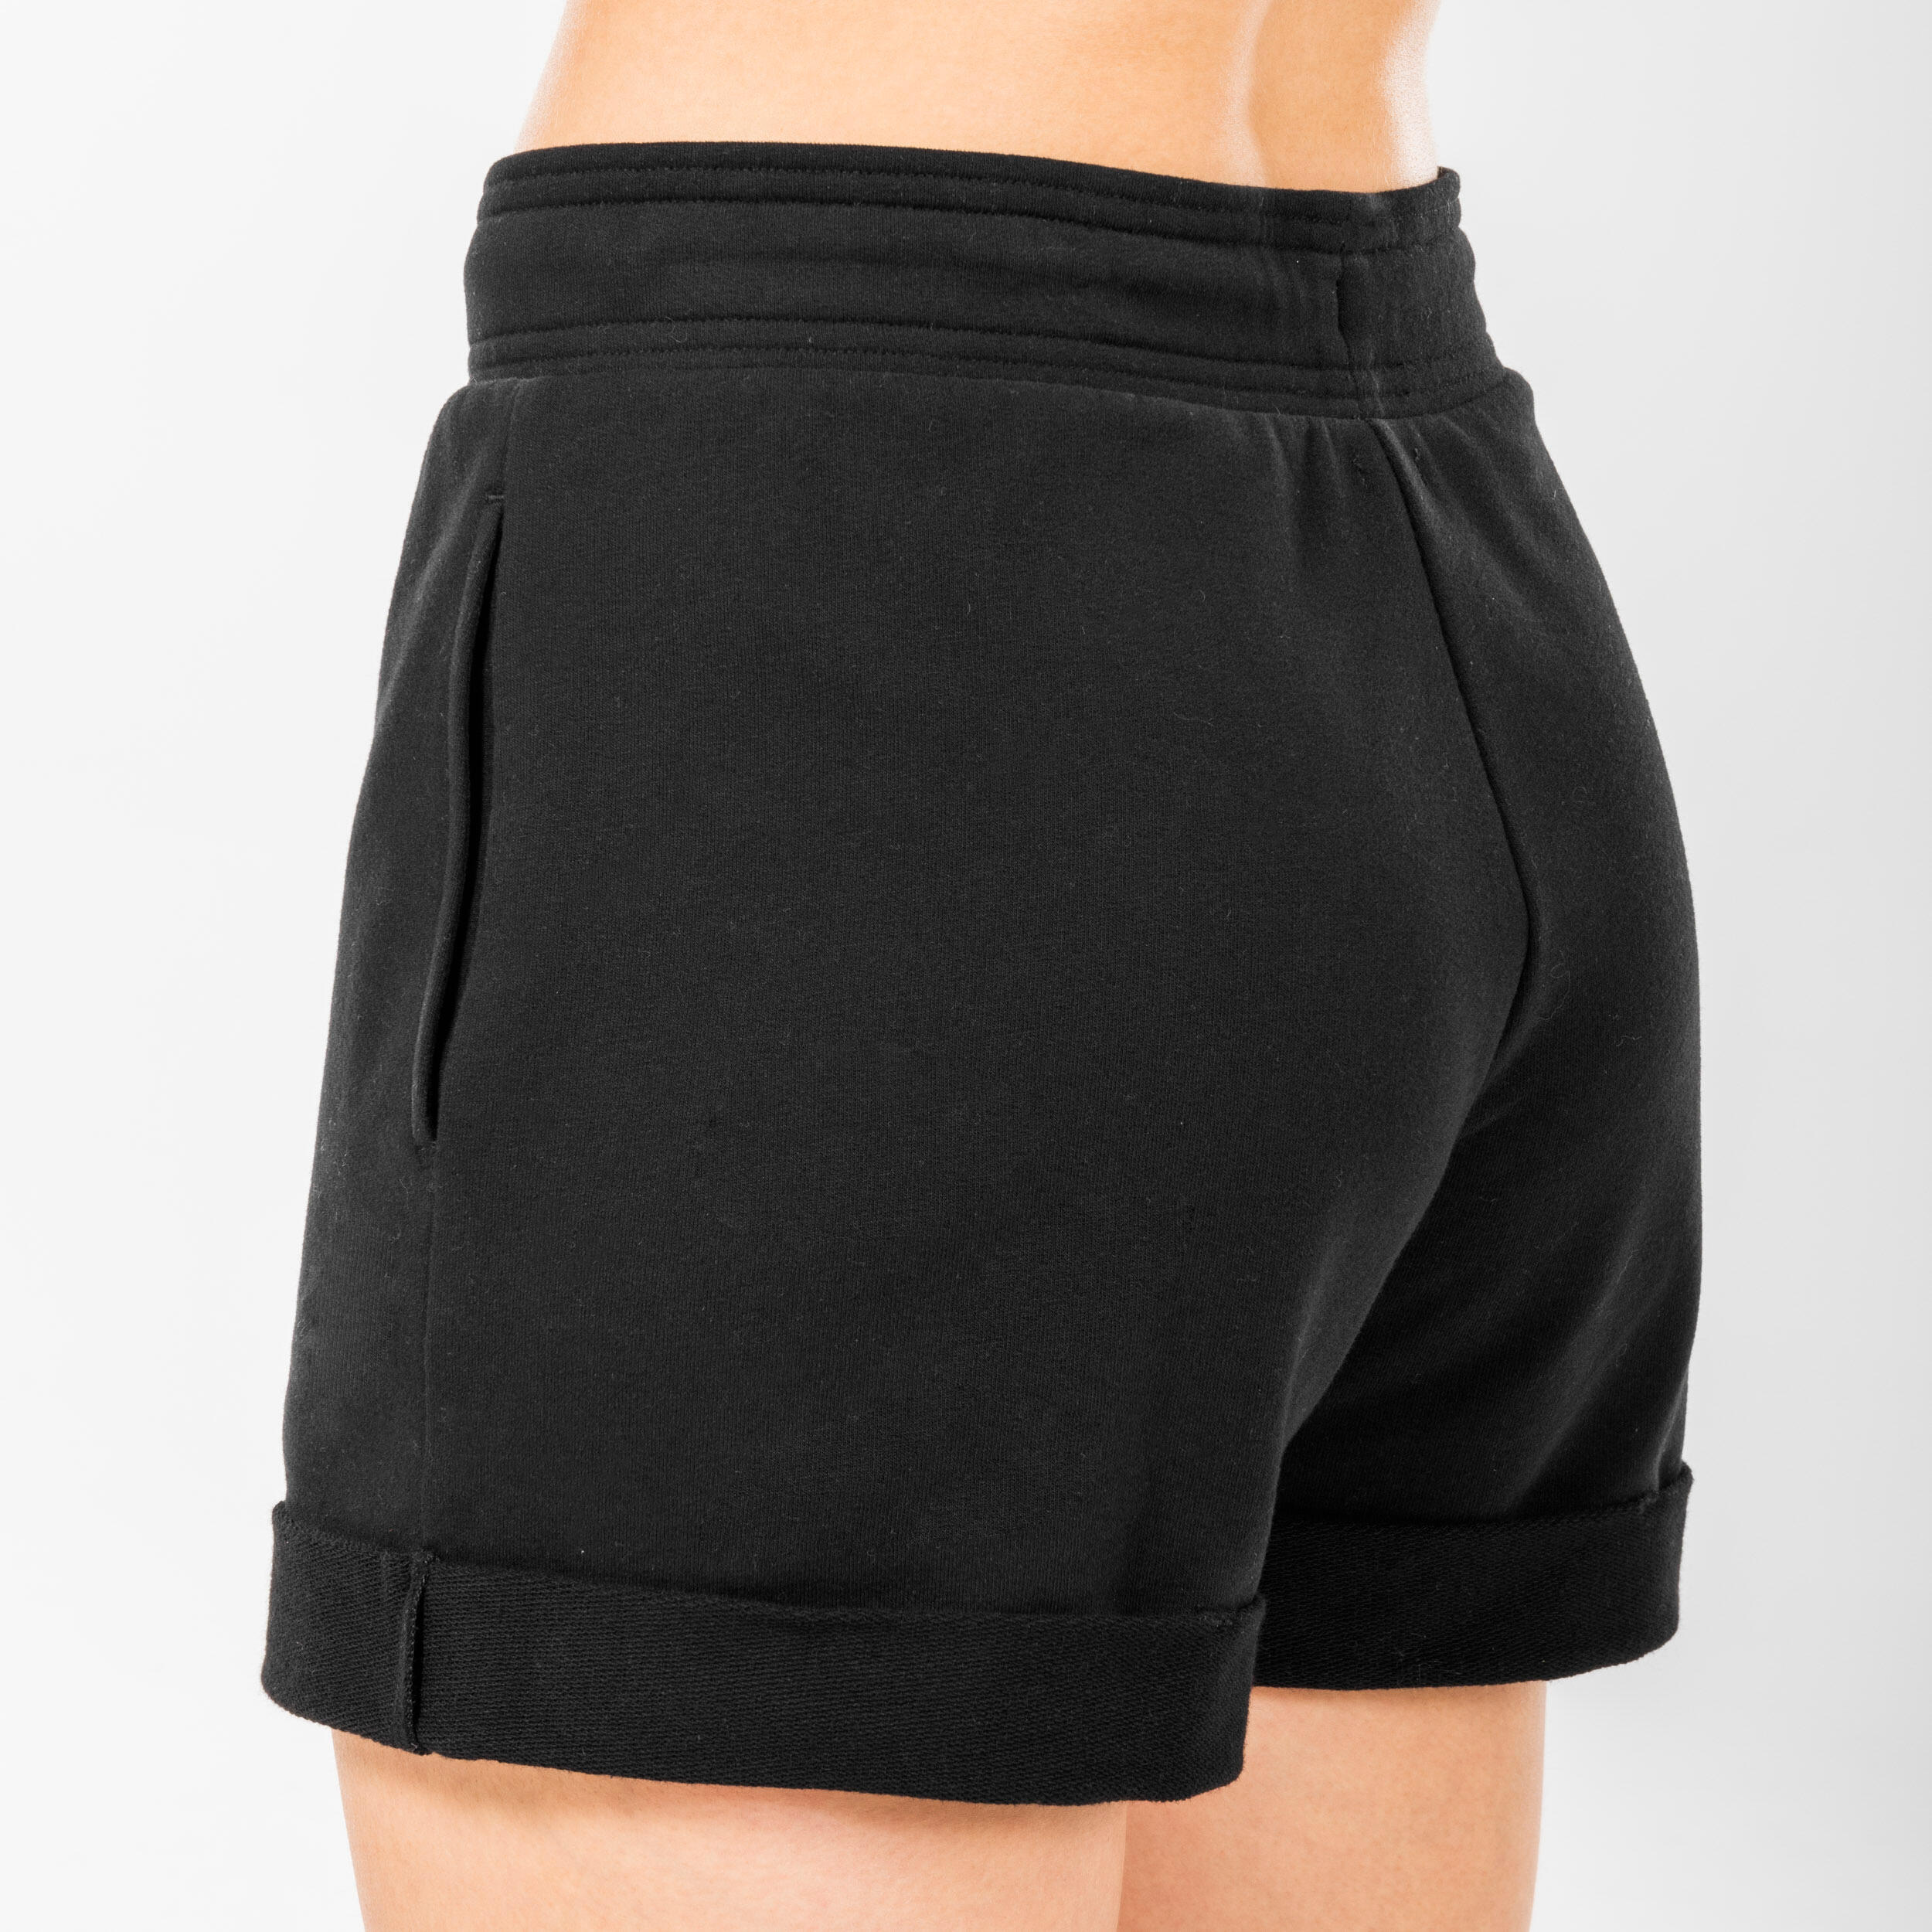 Women's Modern Dance Loose-Fit Shorts - Black 5/7